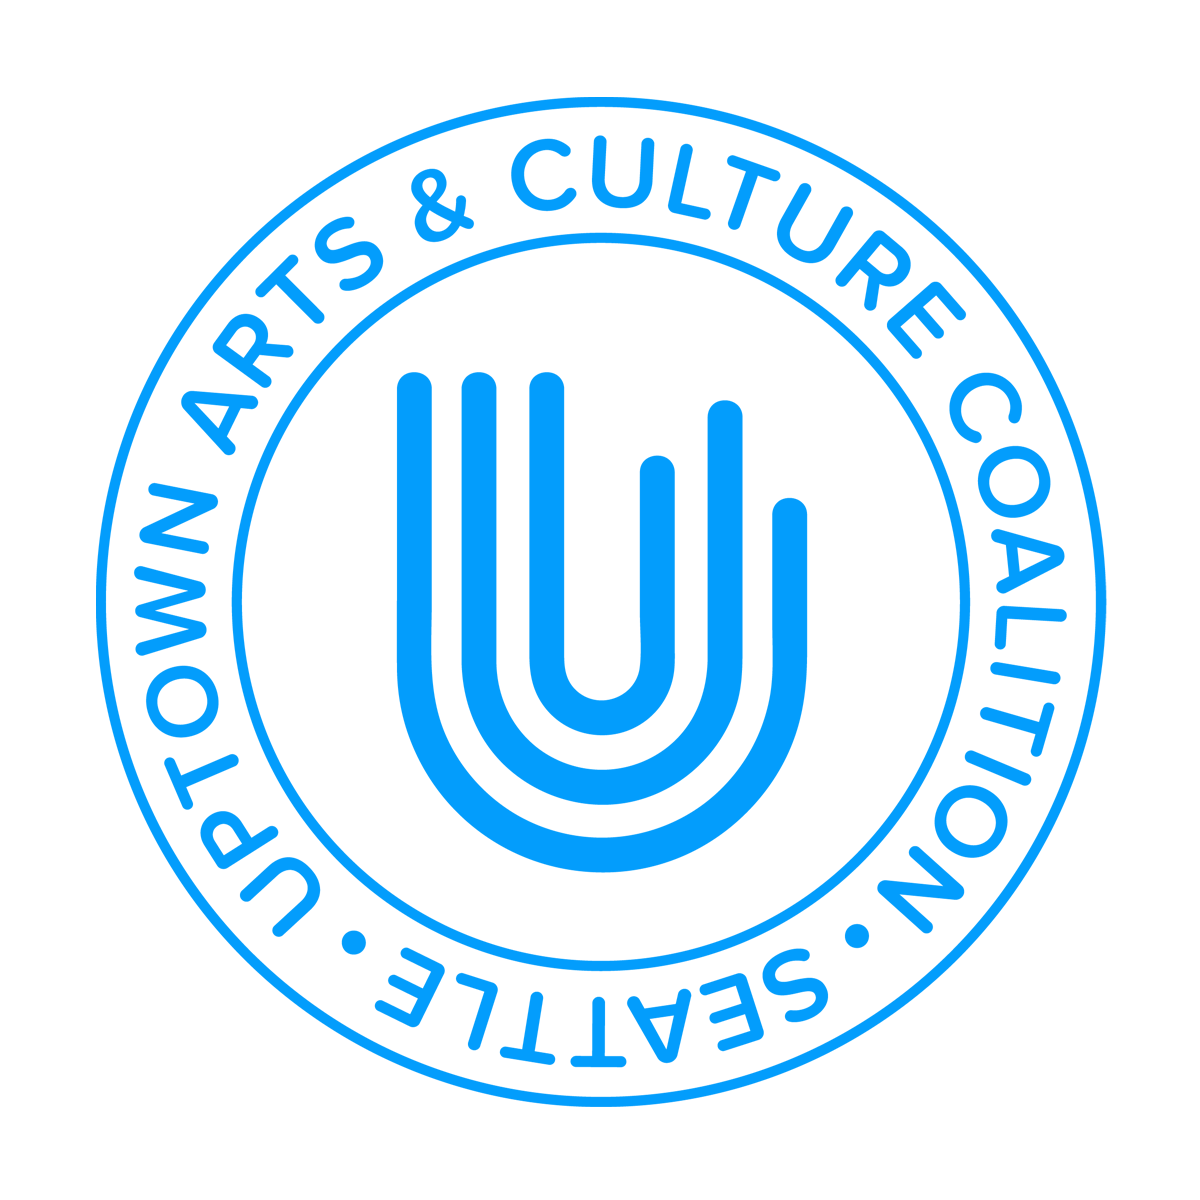 Uptown Arts & Culture Coalition